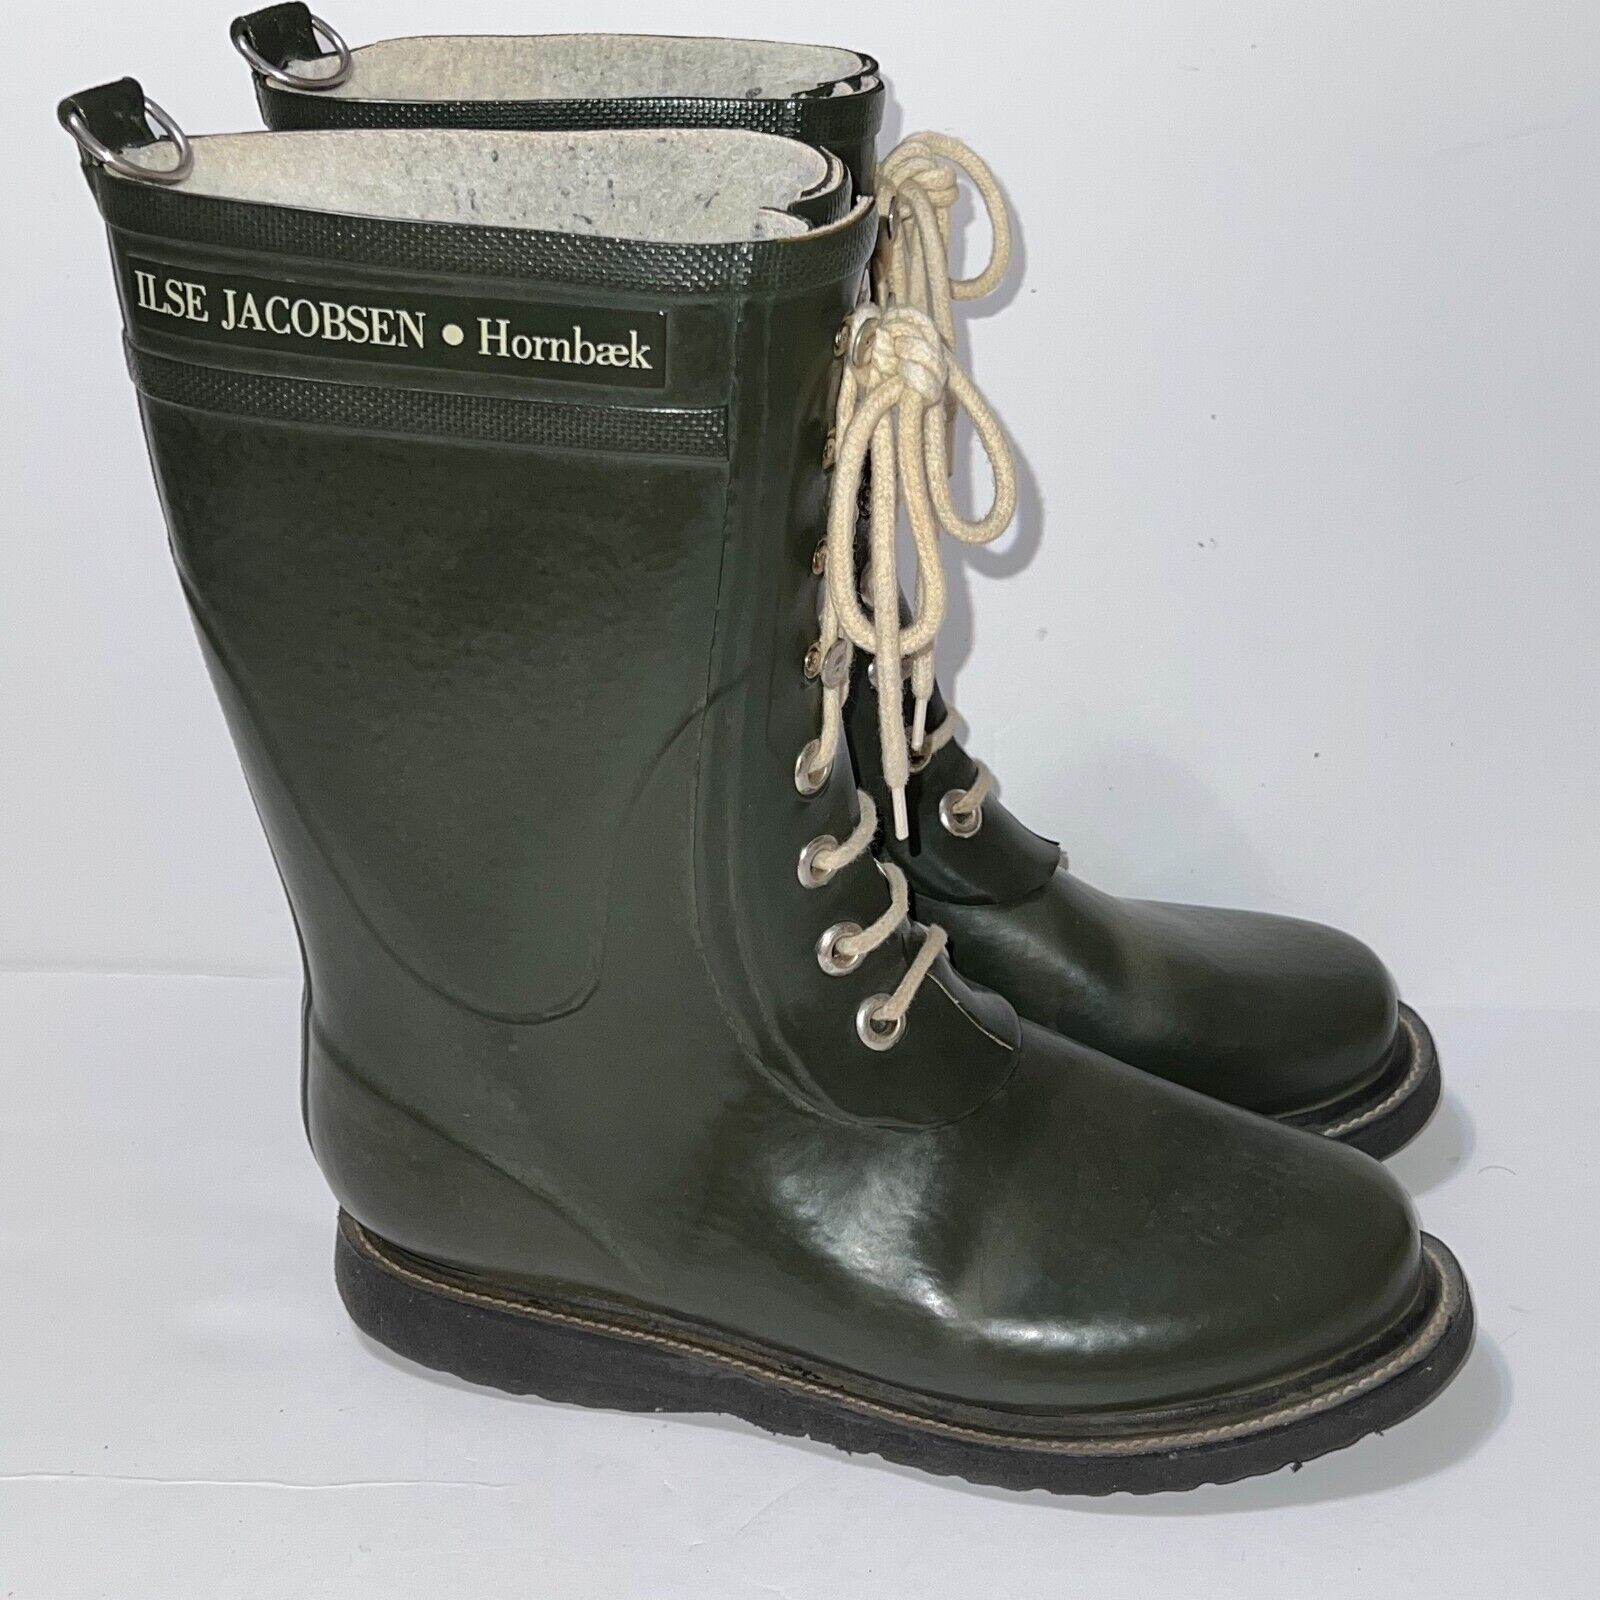 Ilse Jacobsen Hornbaek Green Rubber Rain Boots Lace Up Size EU 35 US 4.5  Danish